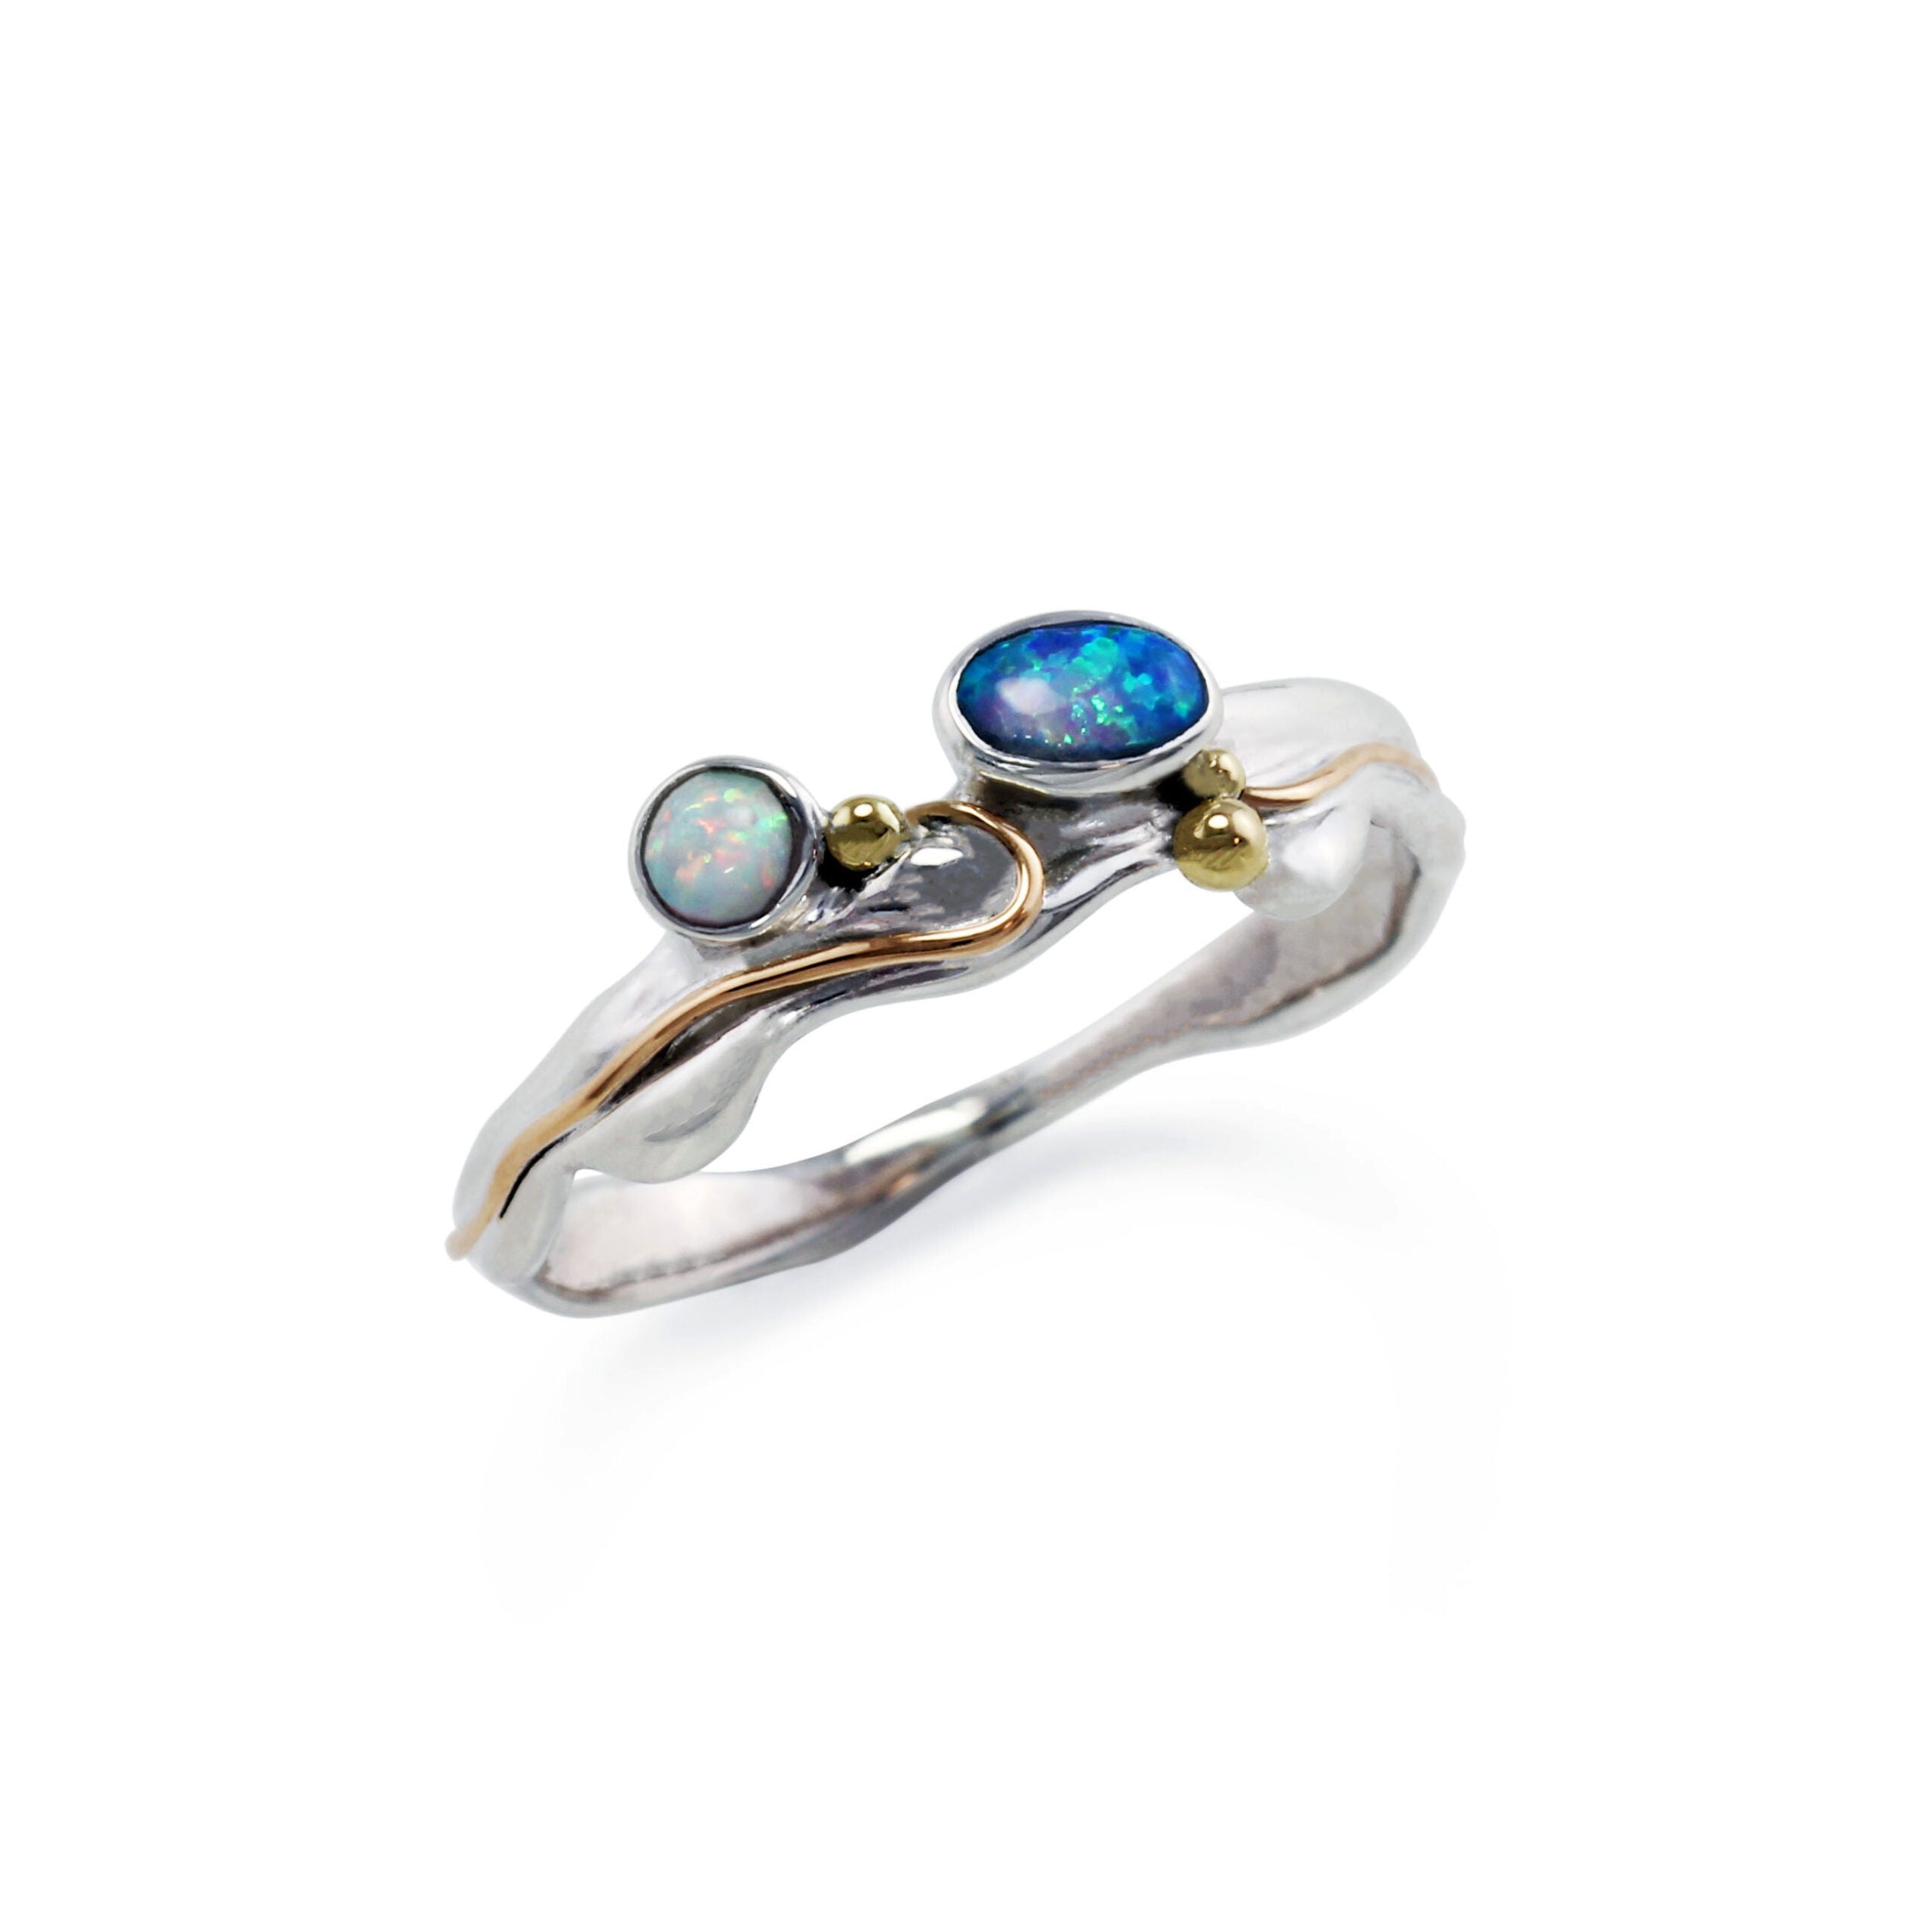 Blue & White Opalite Ring - The Nancy Smillie Shop - Art, Jewellery & Designer Gifts Glasgow